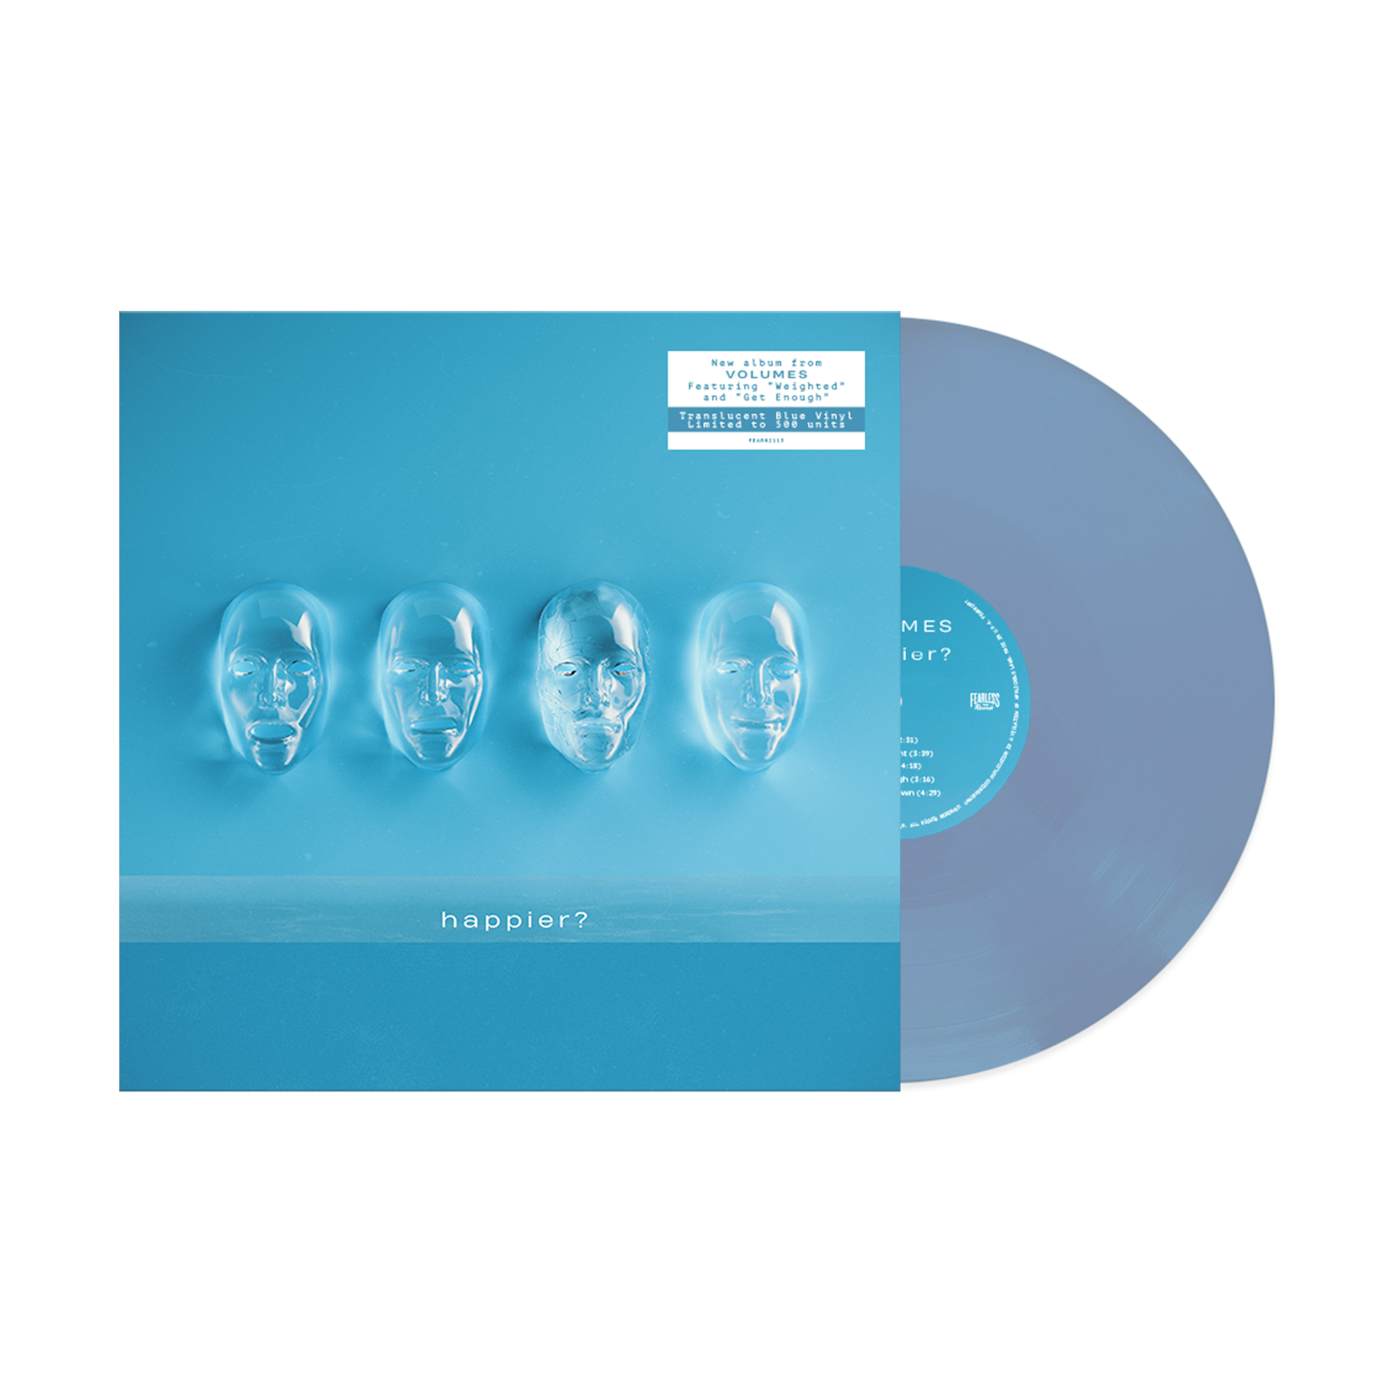 Volumes "Happier?" Translucent Blue LP (Vinyl)